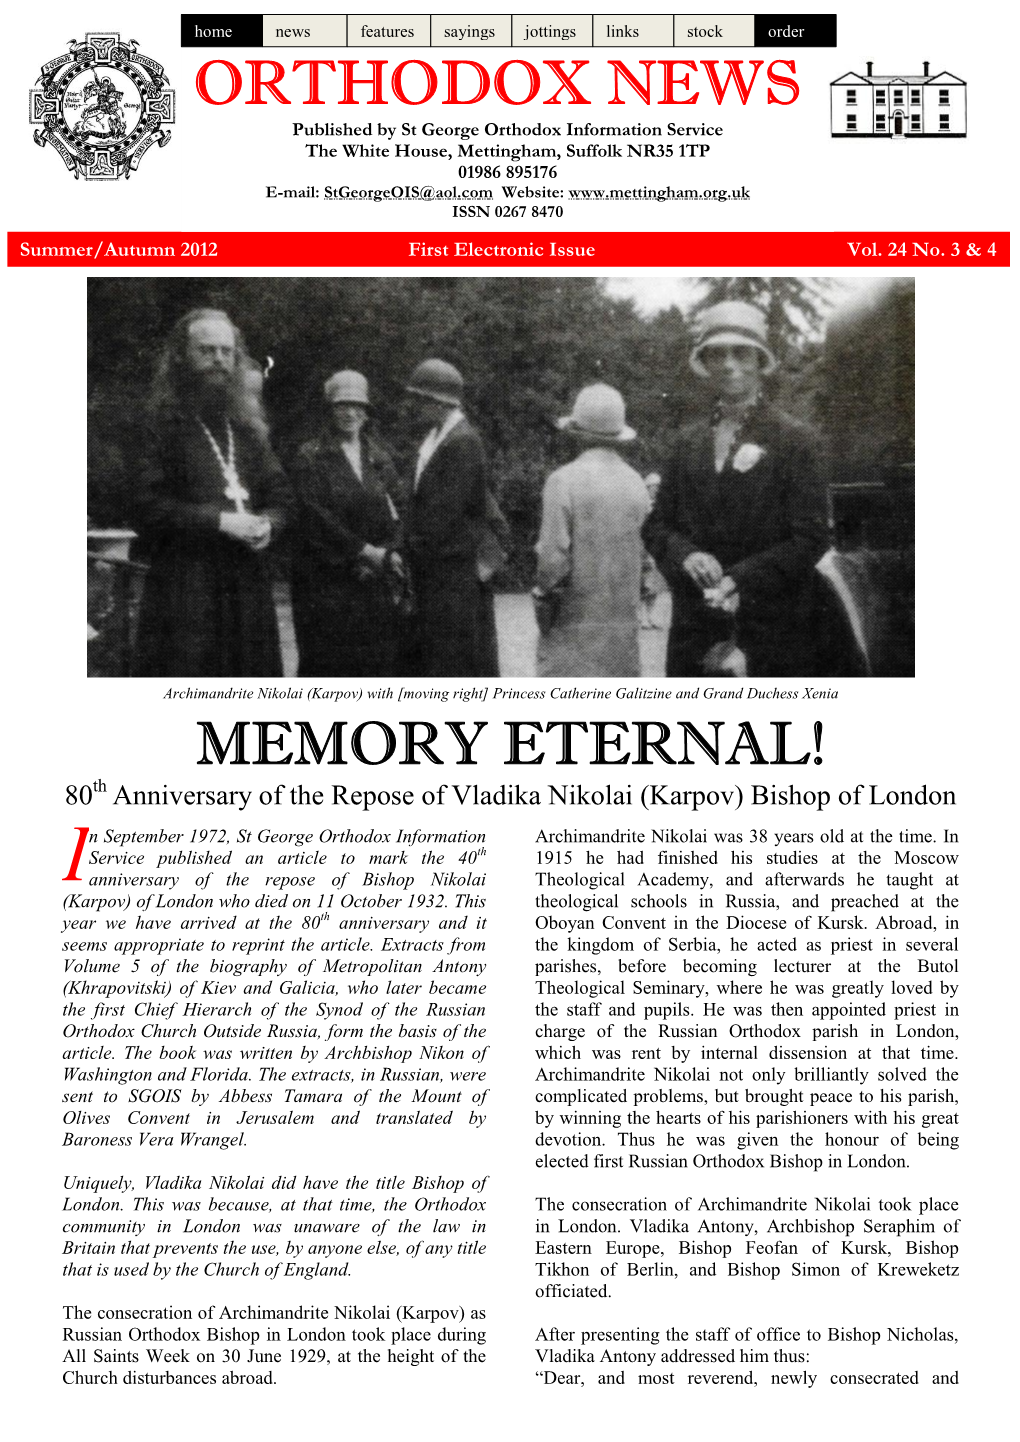 Orthodox News, Summer/Autumn 2012, Vol. 24 No